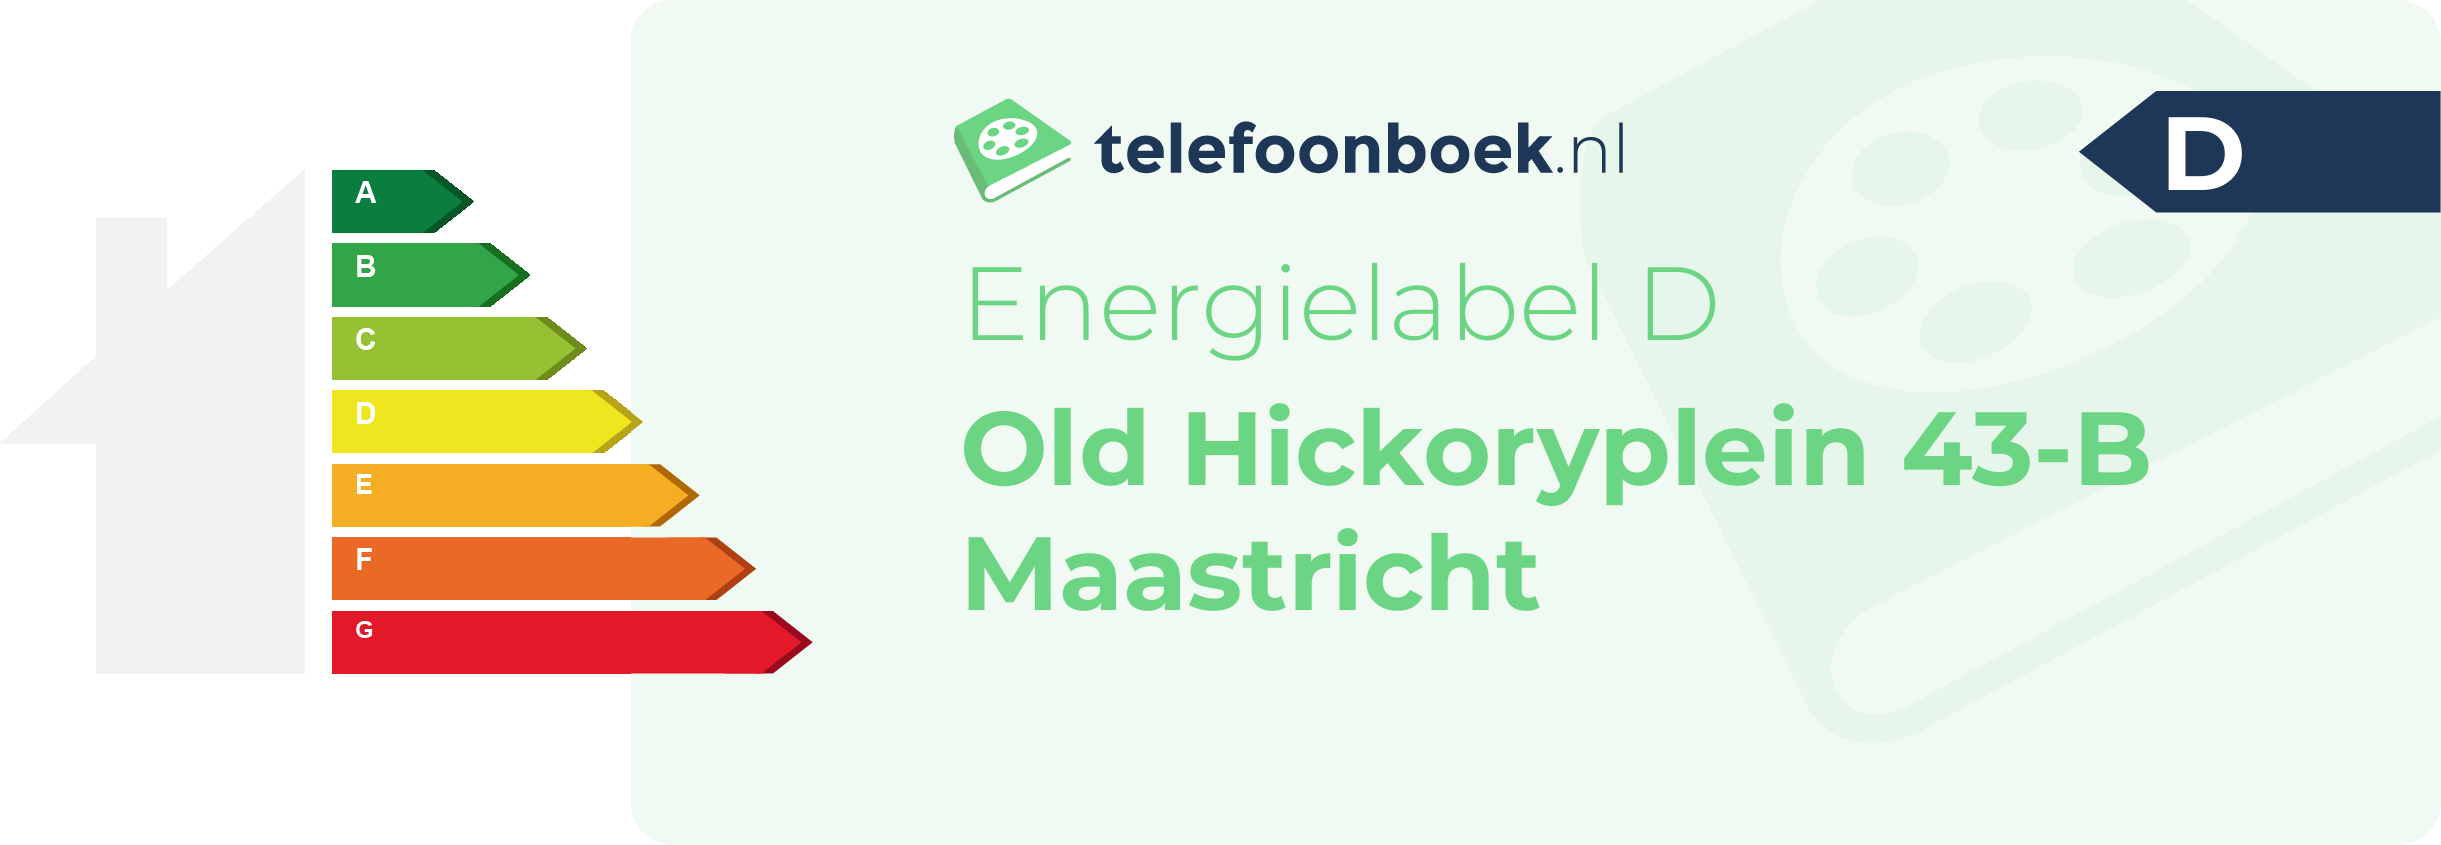 Energielabel Old Hickoryplein 43-B Maastricht